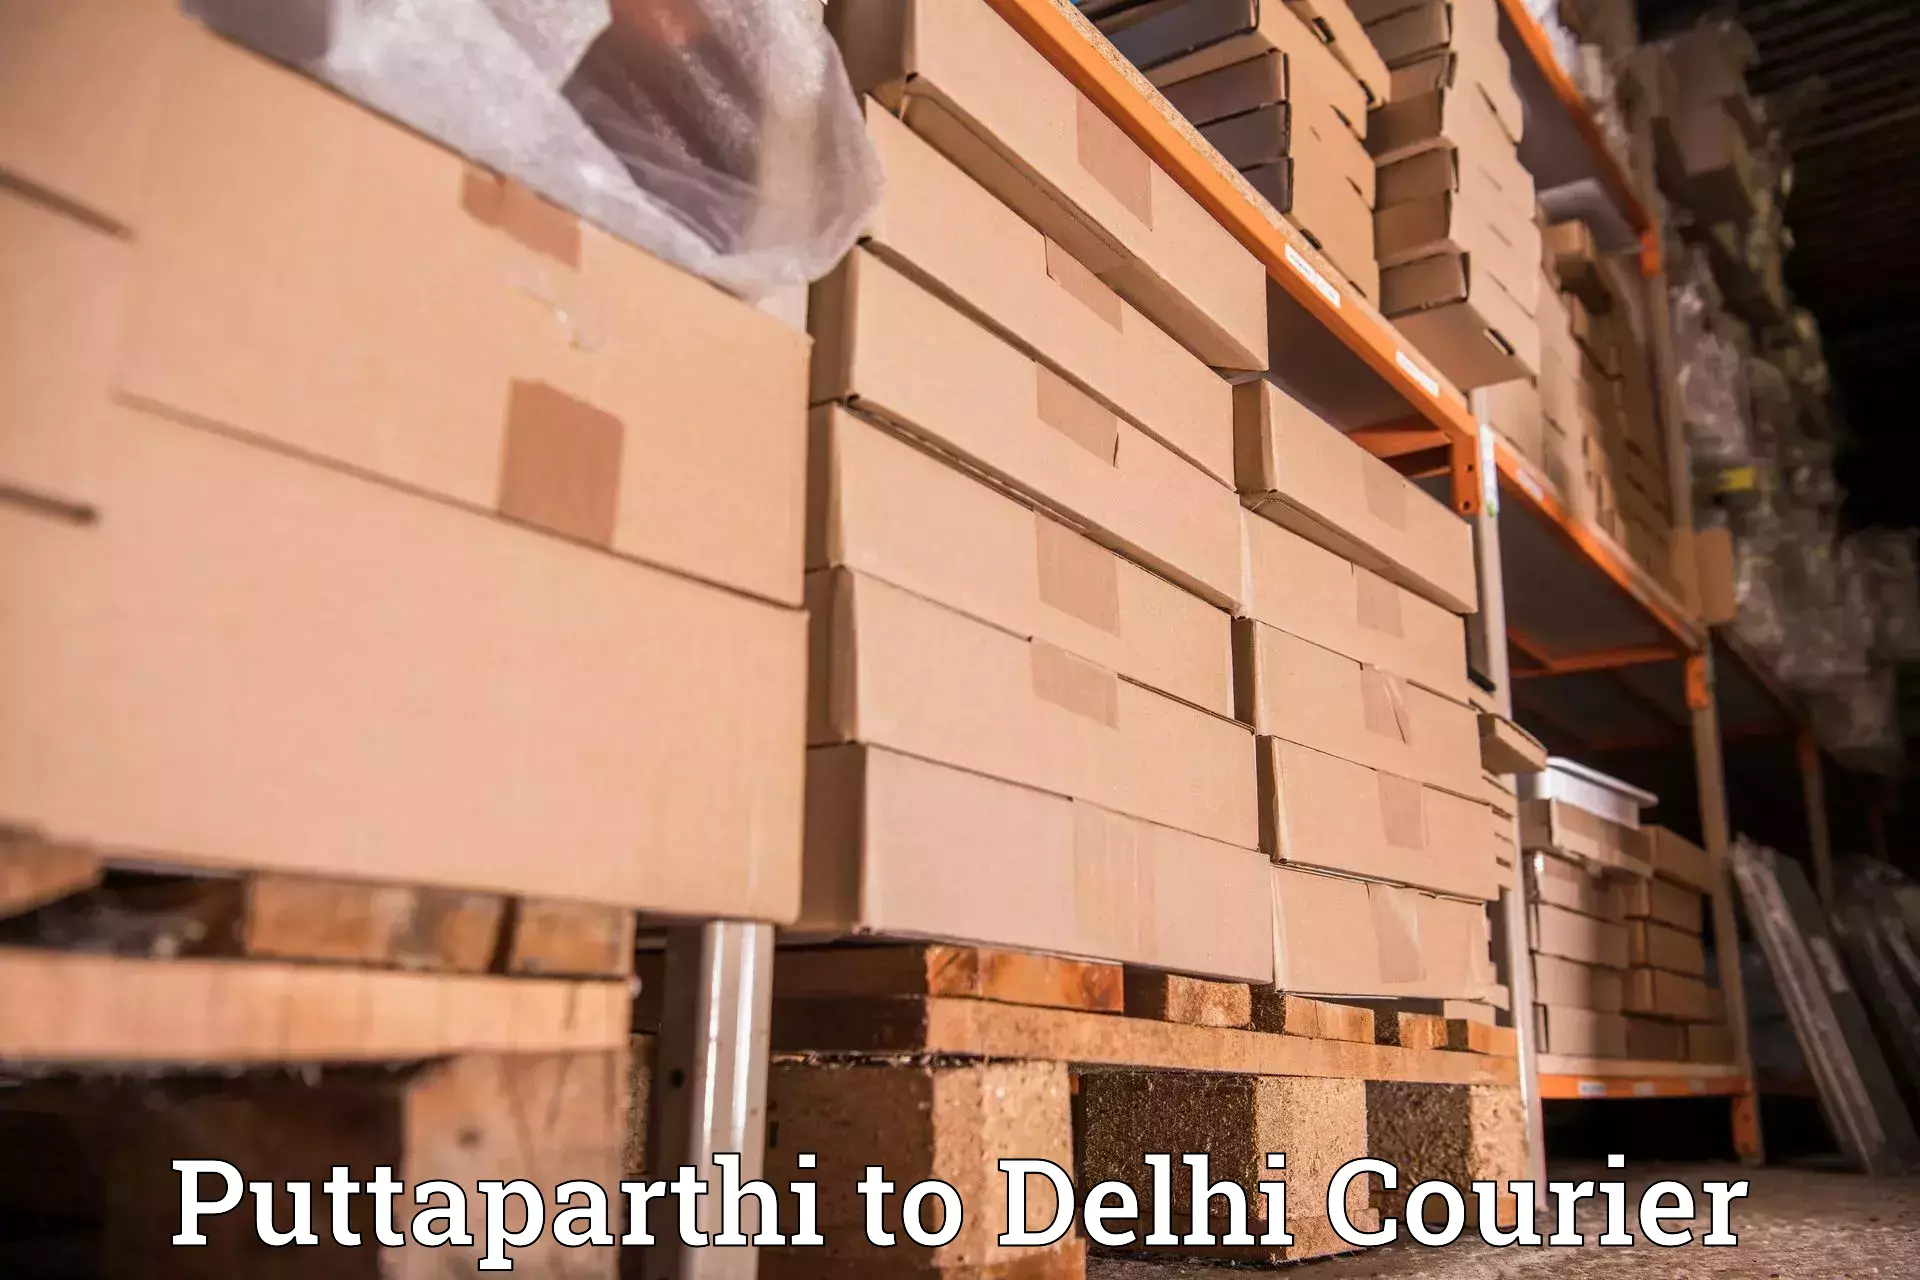 Courier service comparison Puttaparthi to Kalkaji